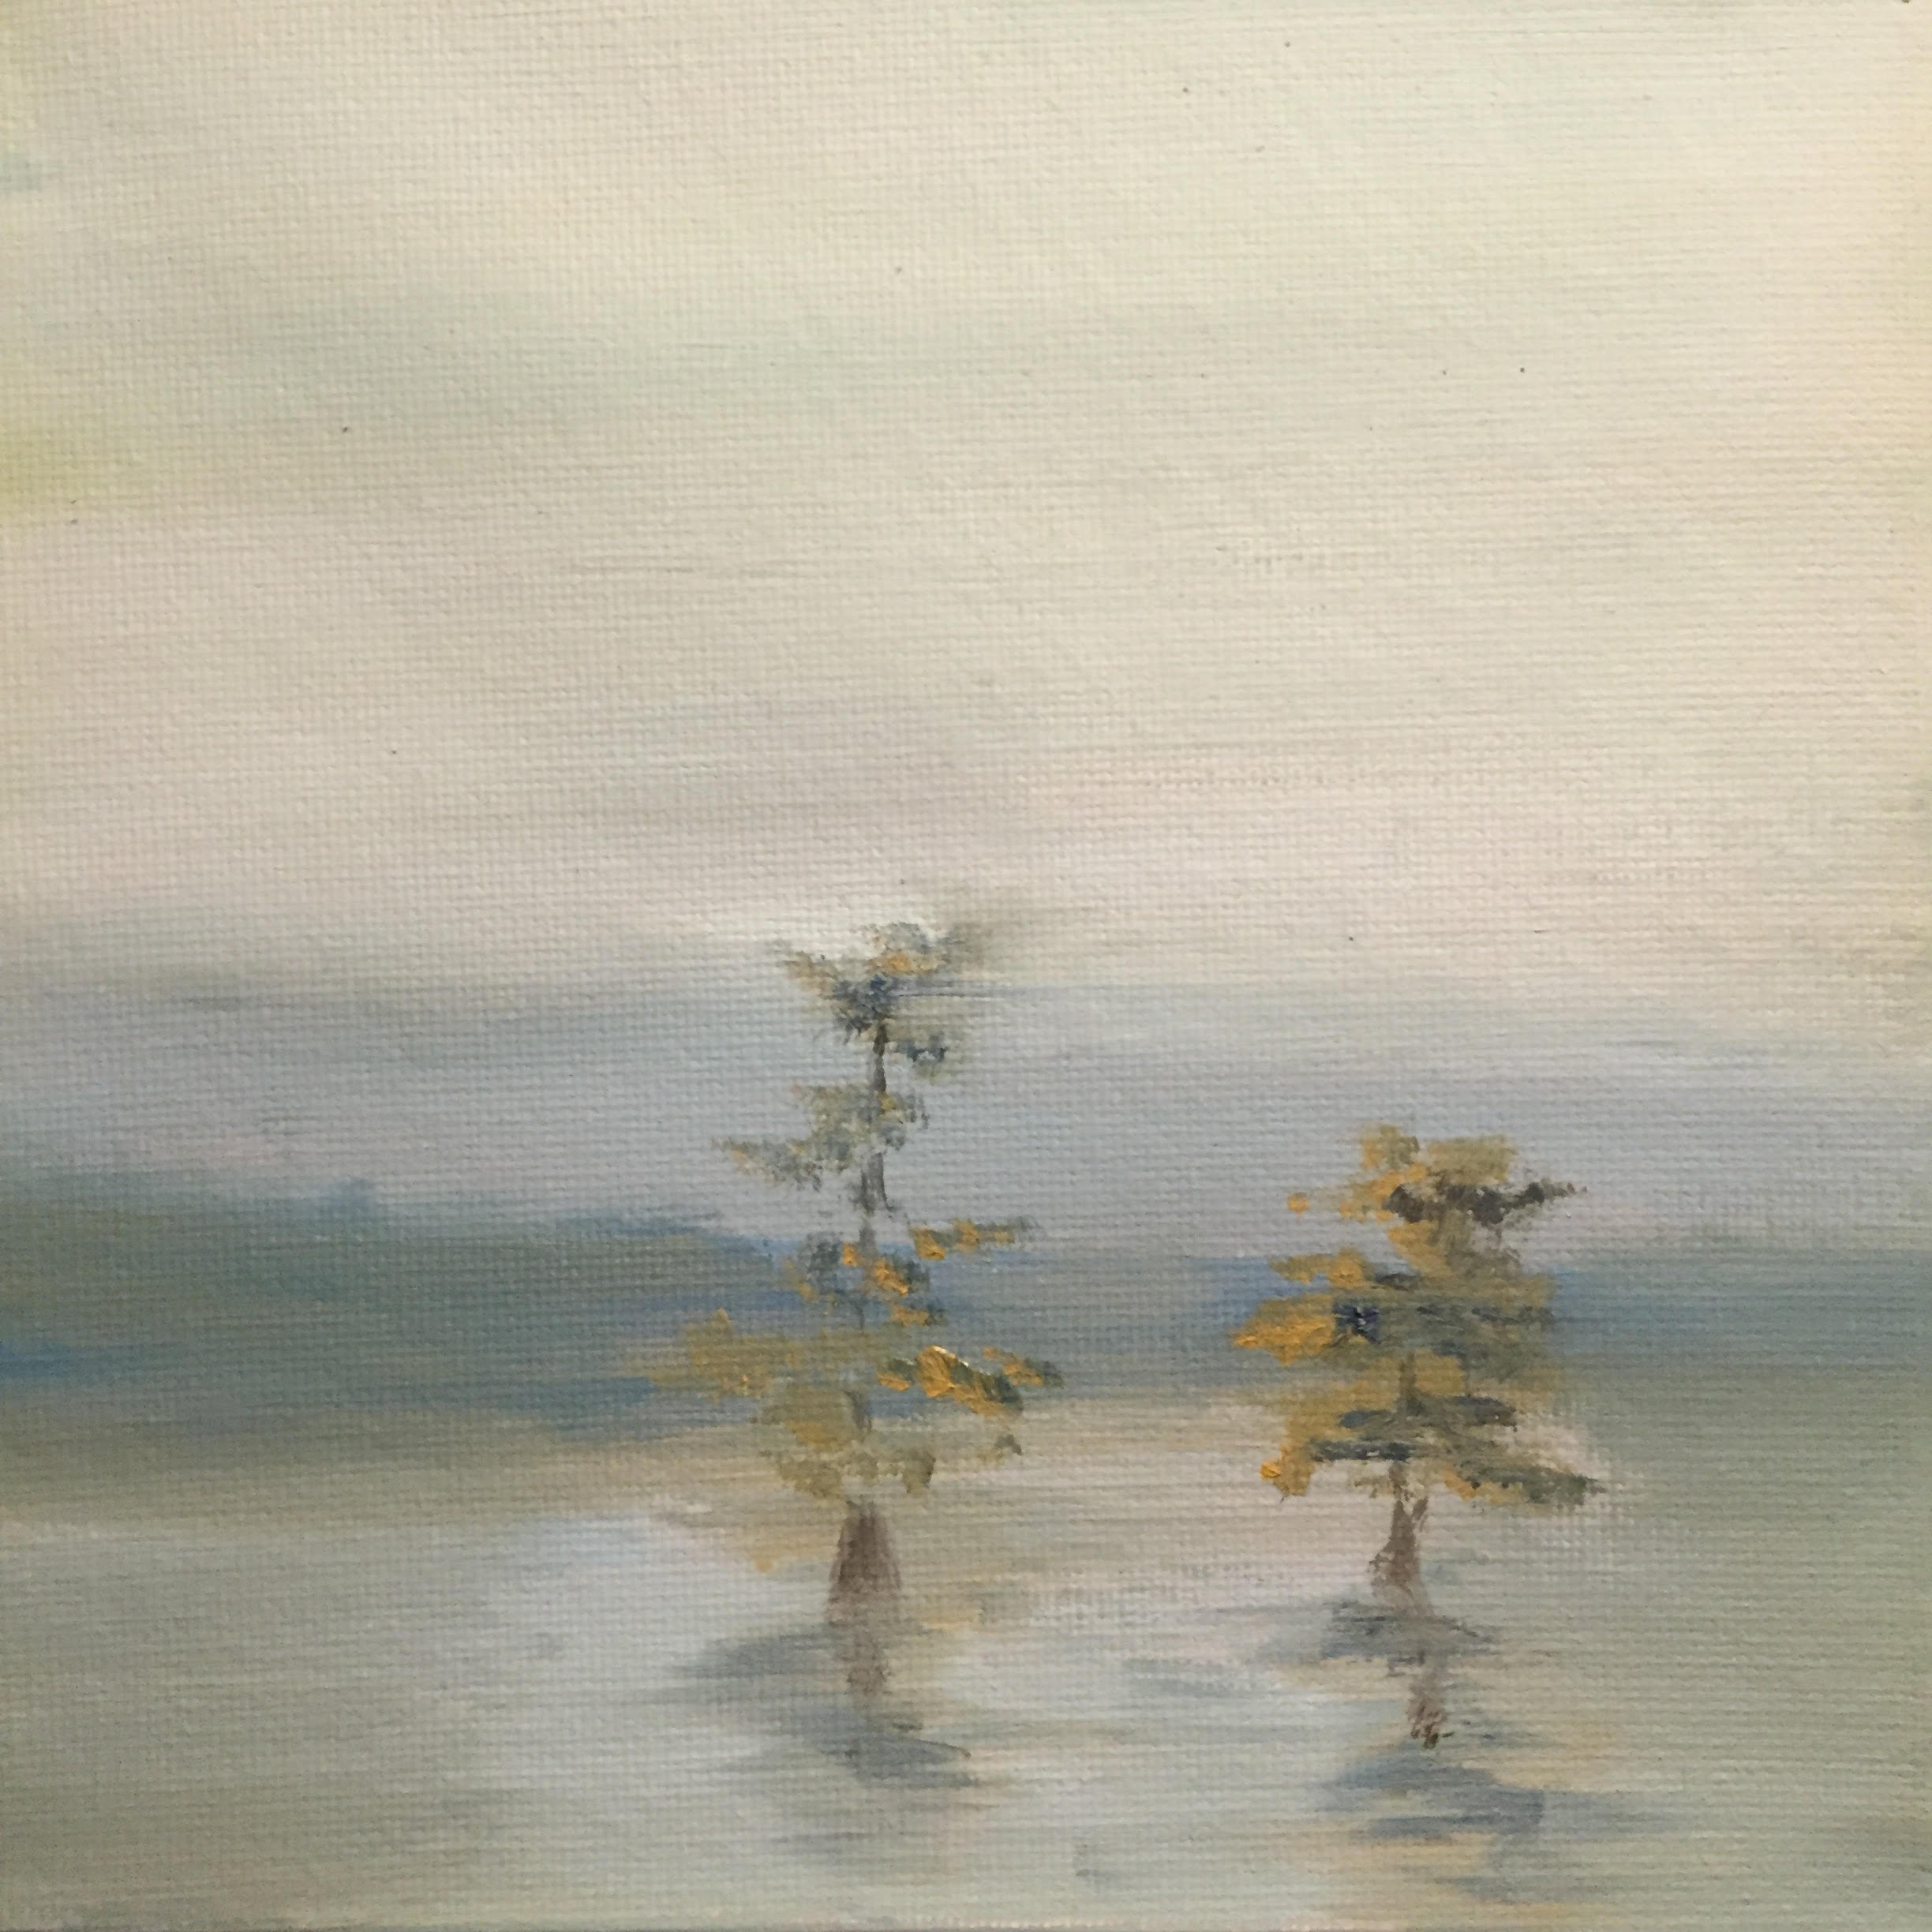   Untitled , Lake D’arbonne, Louisiana, 2022  Oil on Canvas, 6 x 6” 